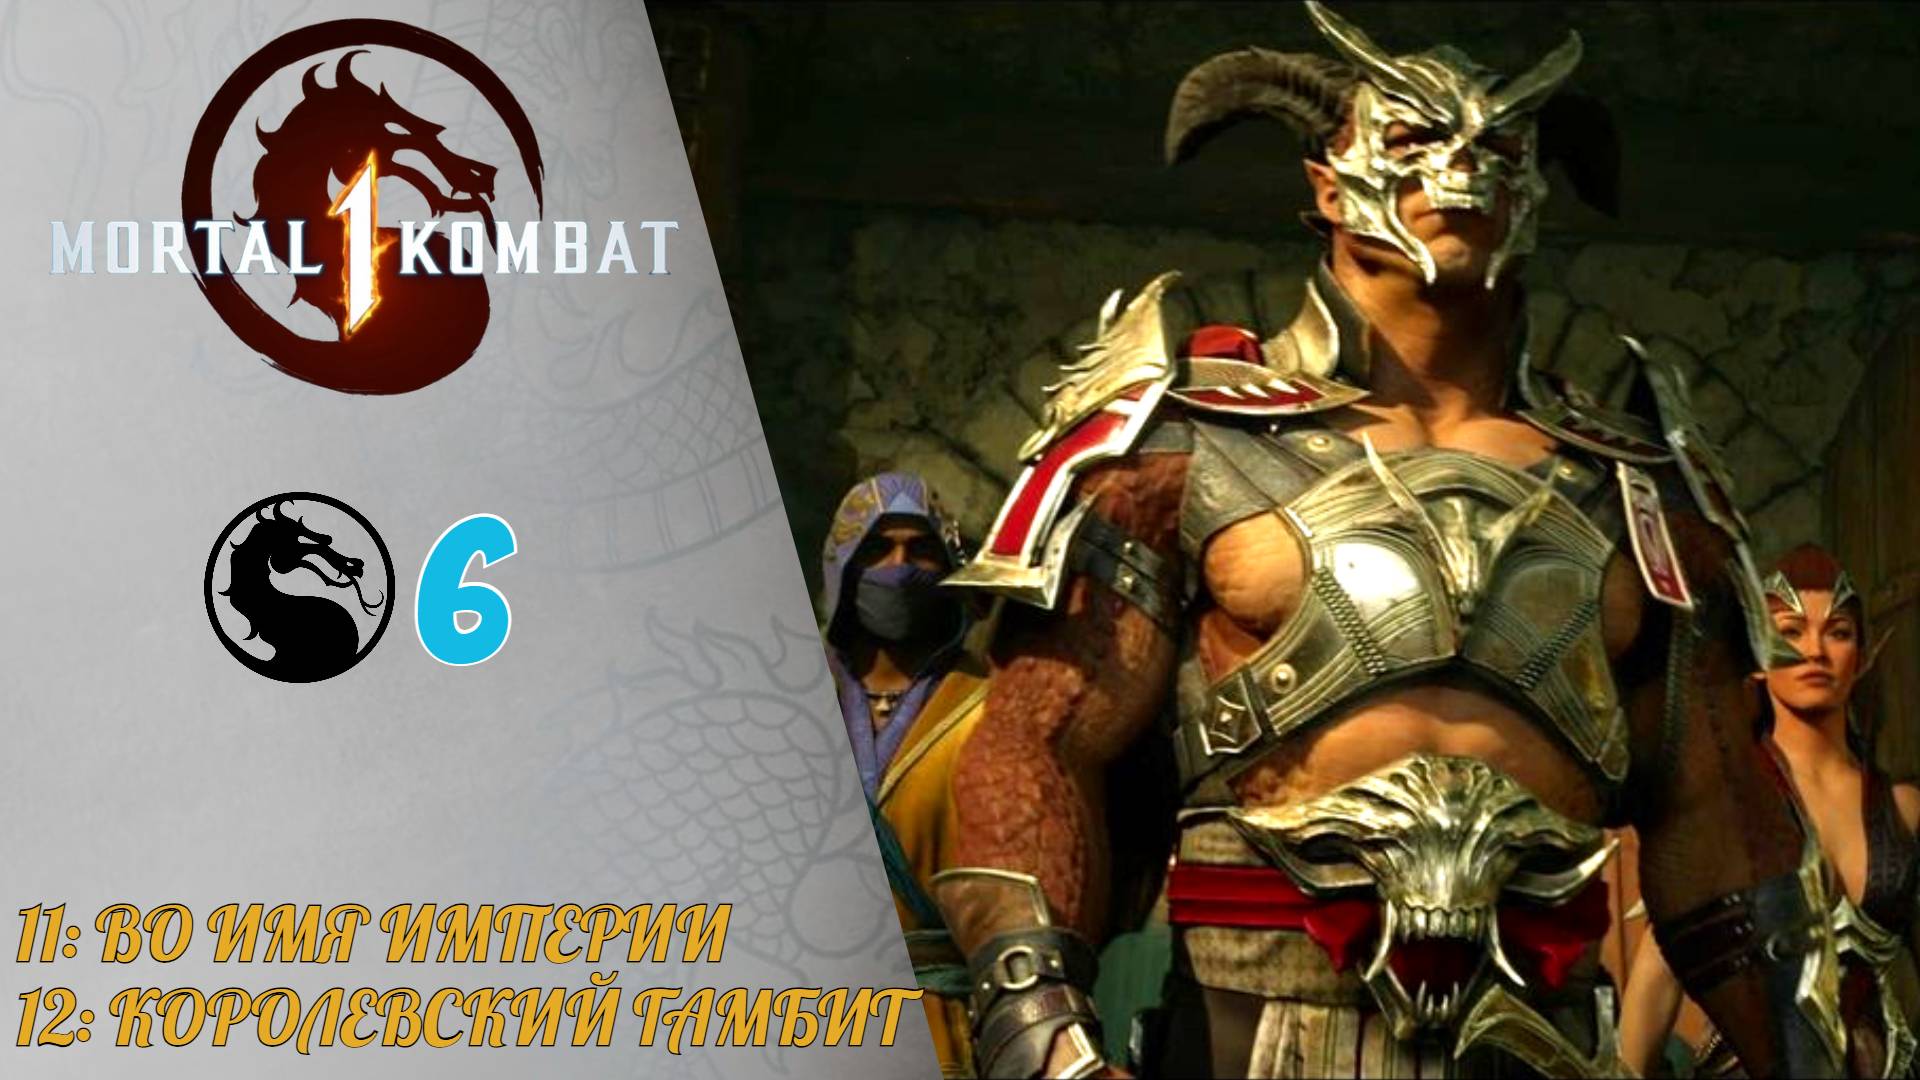 Прохождение Mortal Kombat 1 #6 Глава 11 Во имя империи Синдел, Глава 12 Королевский гамбит (Милина)